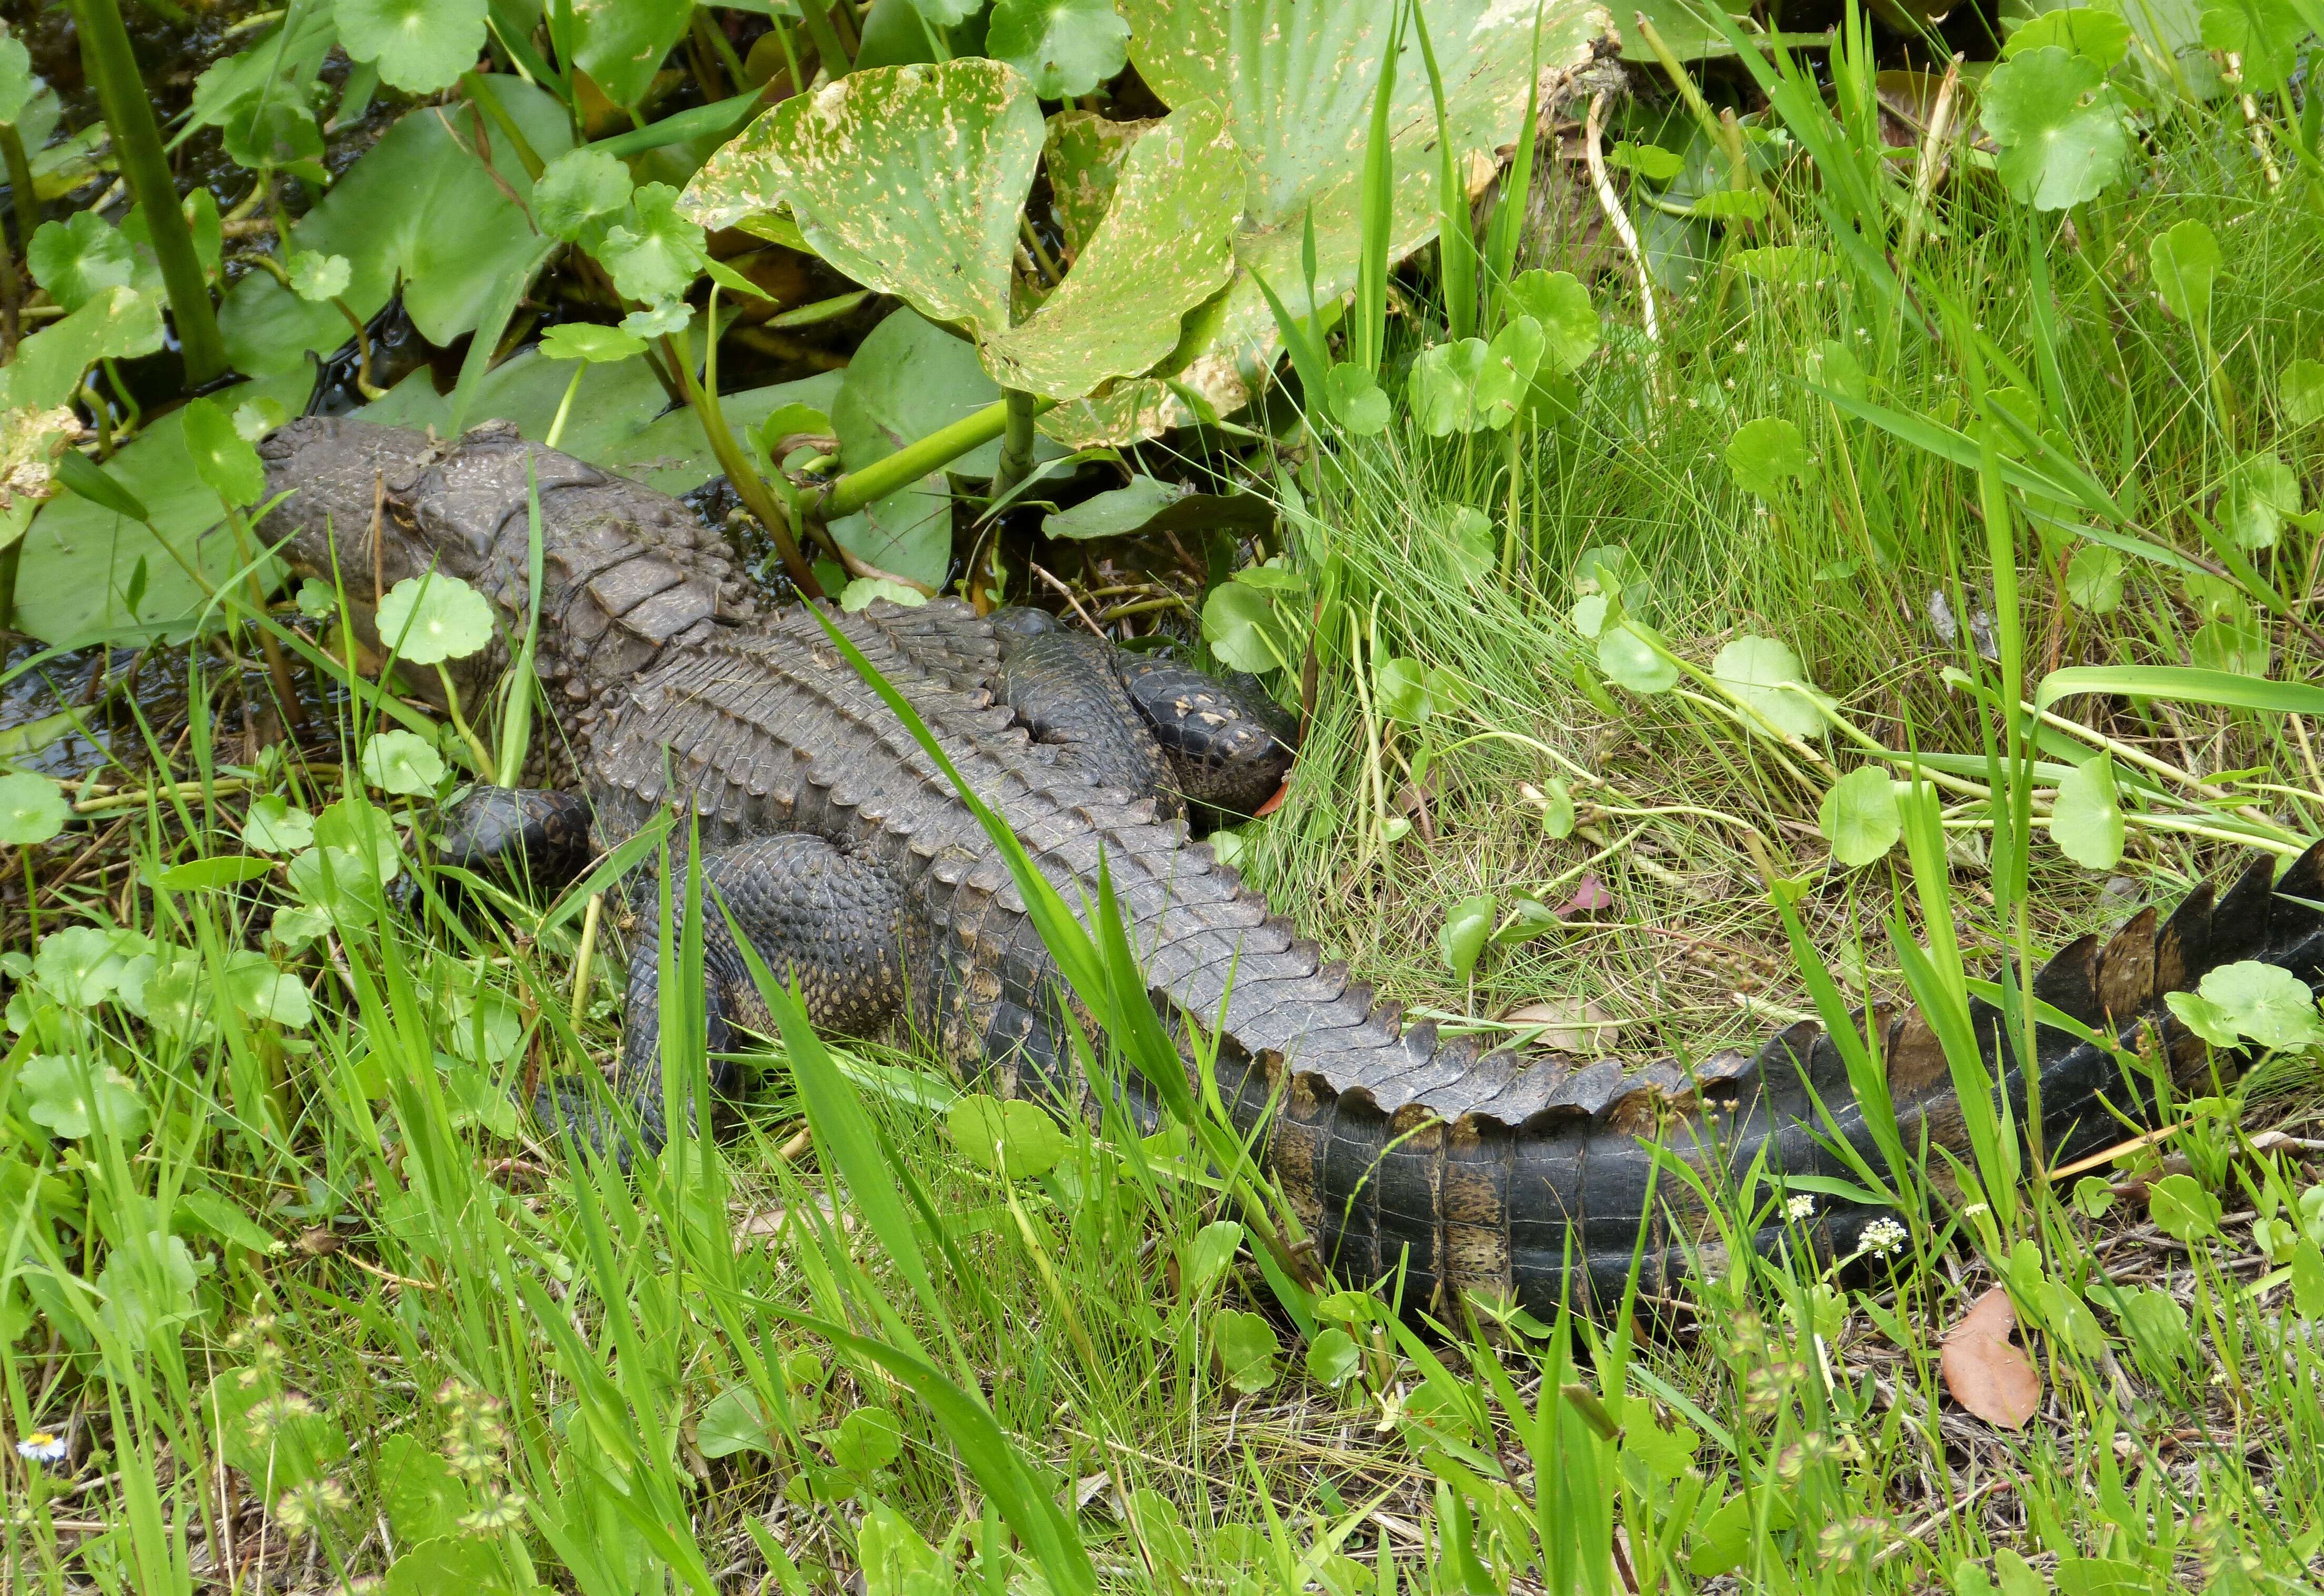 Image of alligators